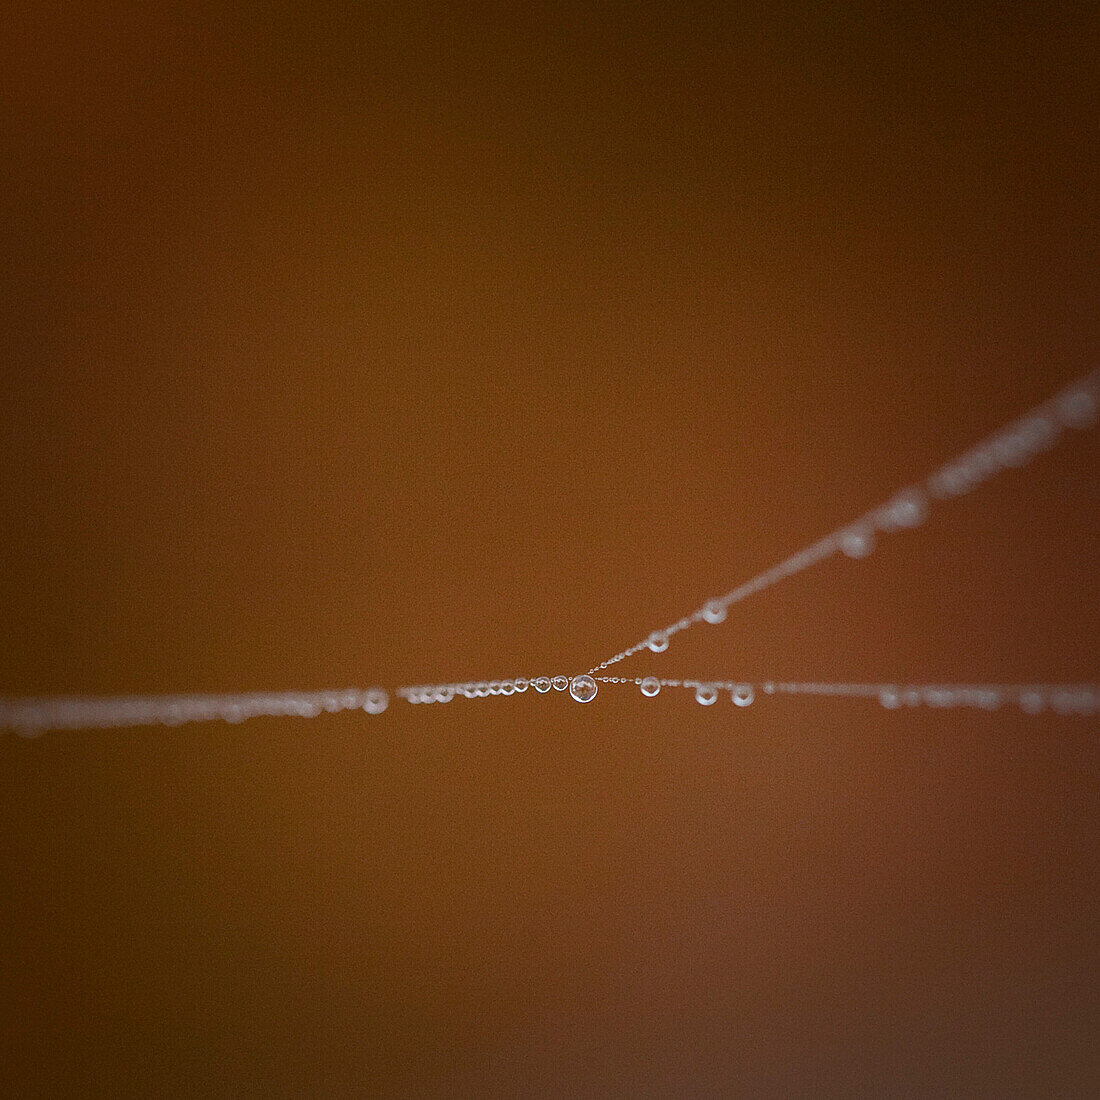 Dew on Spider Web, Close-Up